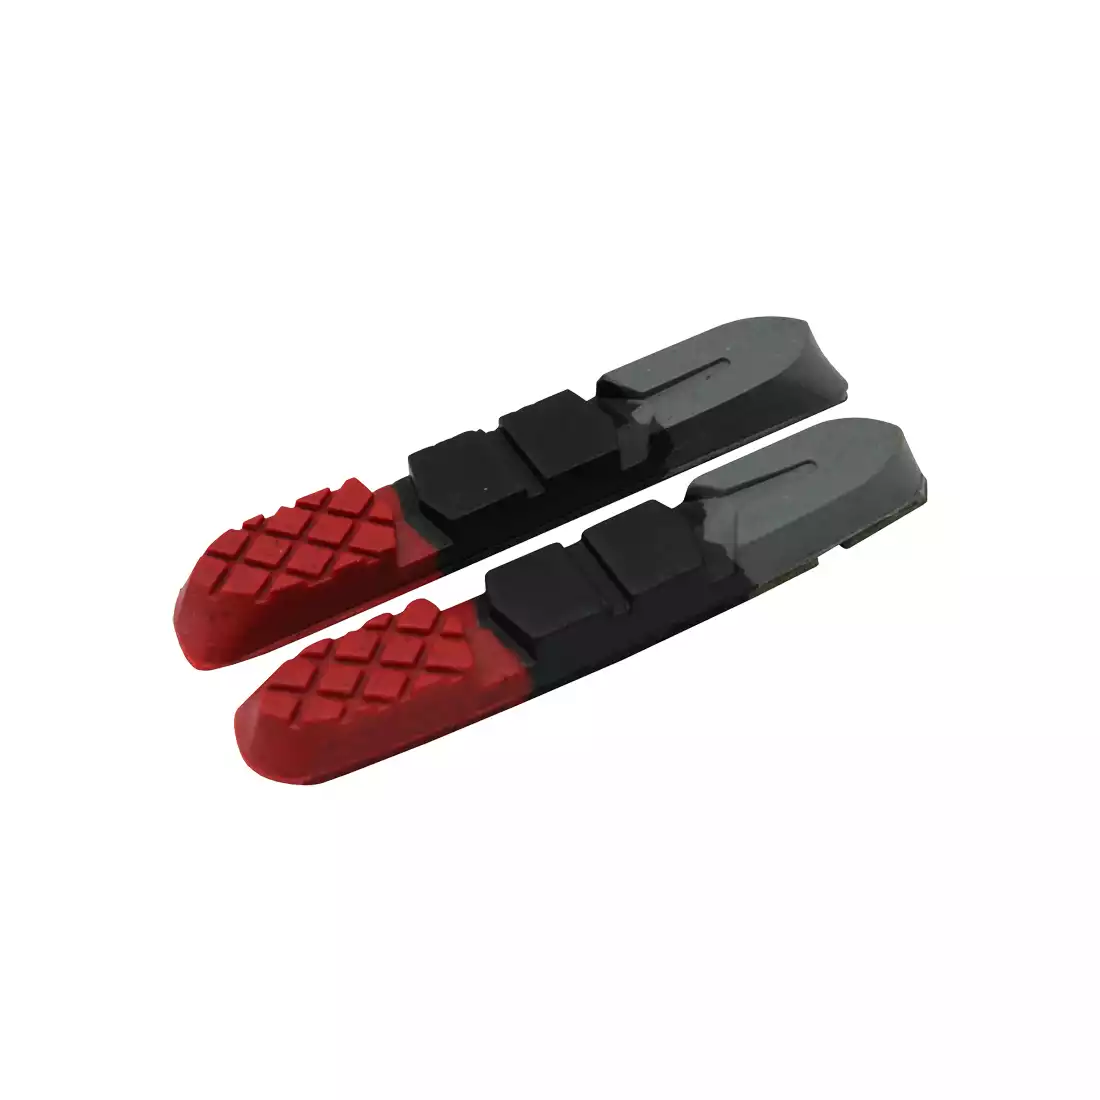 CLARKS CPS501 Brake pads for brakes MTB V-Brake, red-black-gray